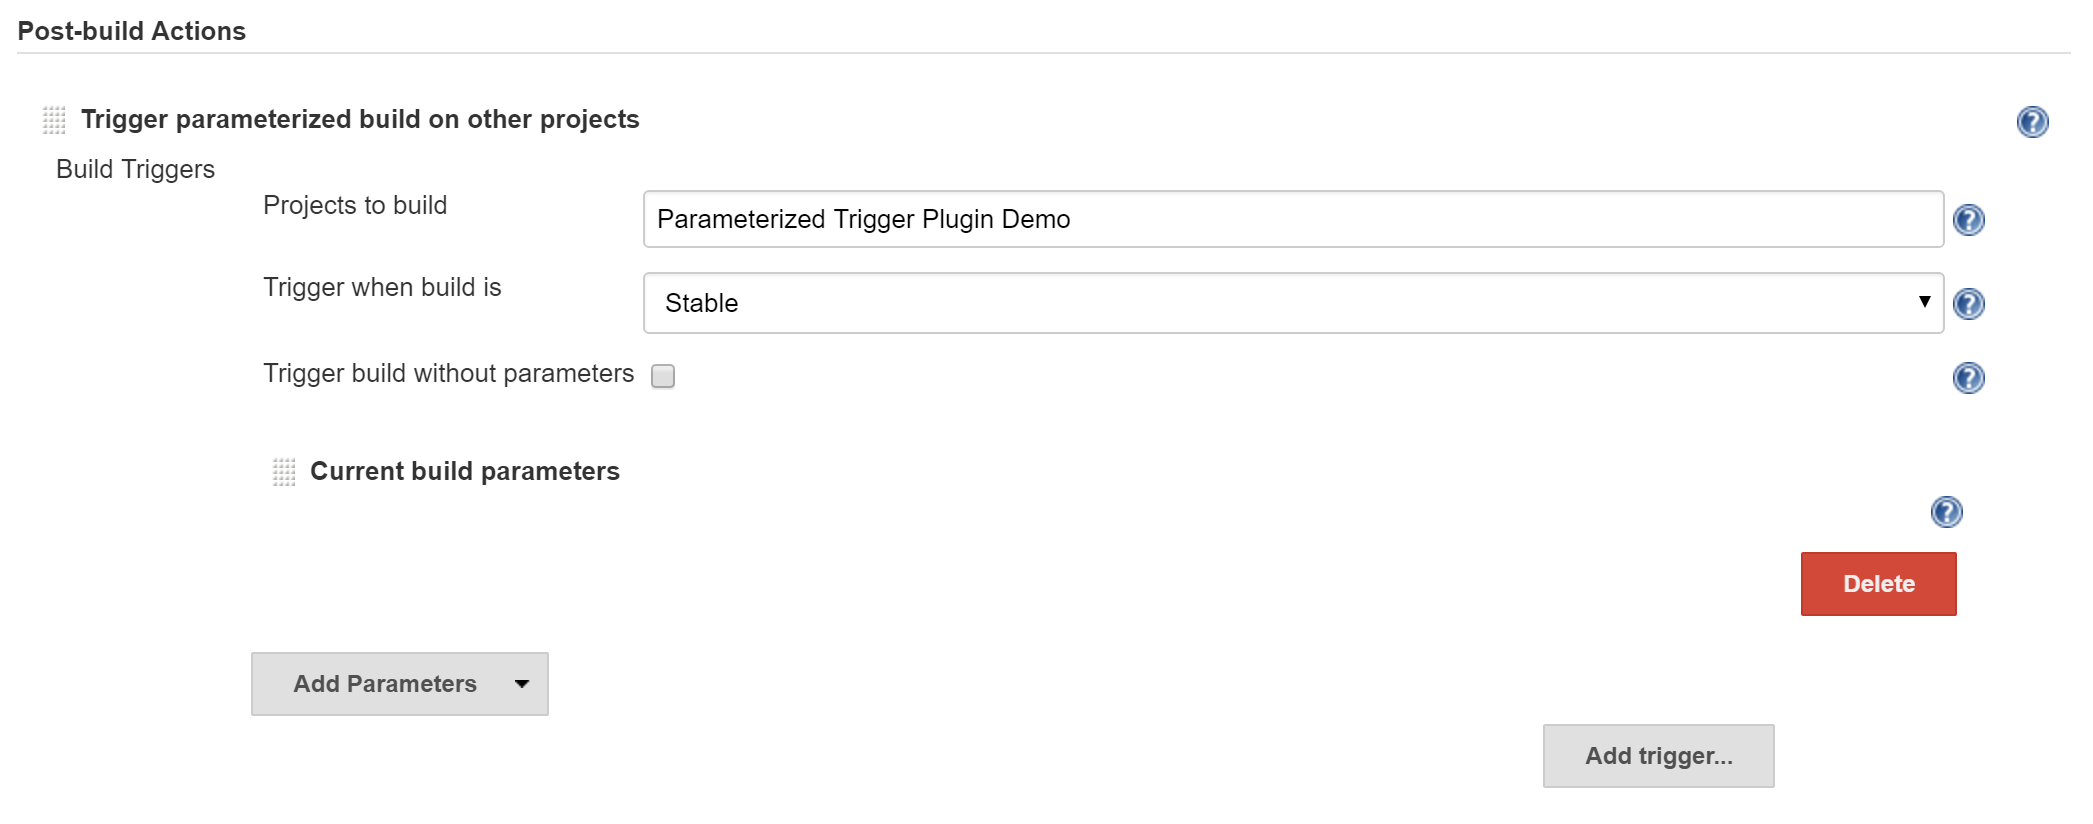 Parameterized Trigger Plugin